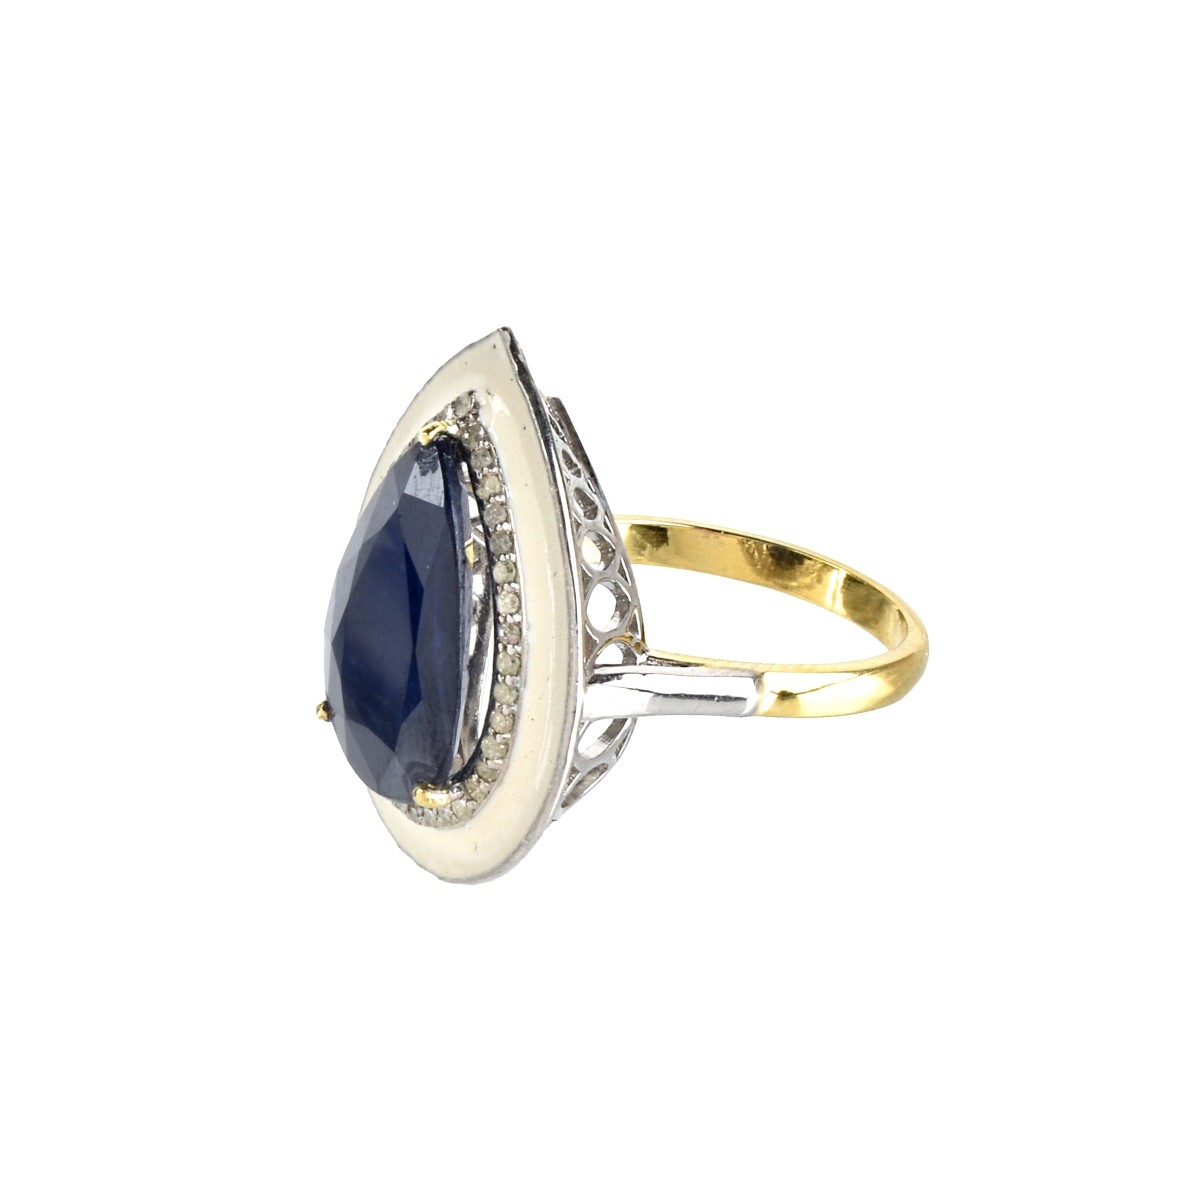 Sapphire, Diamond and Enamel Ring